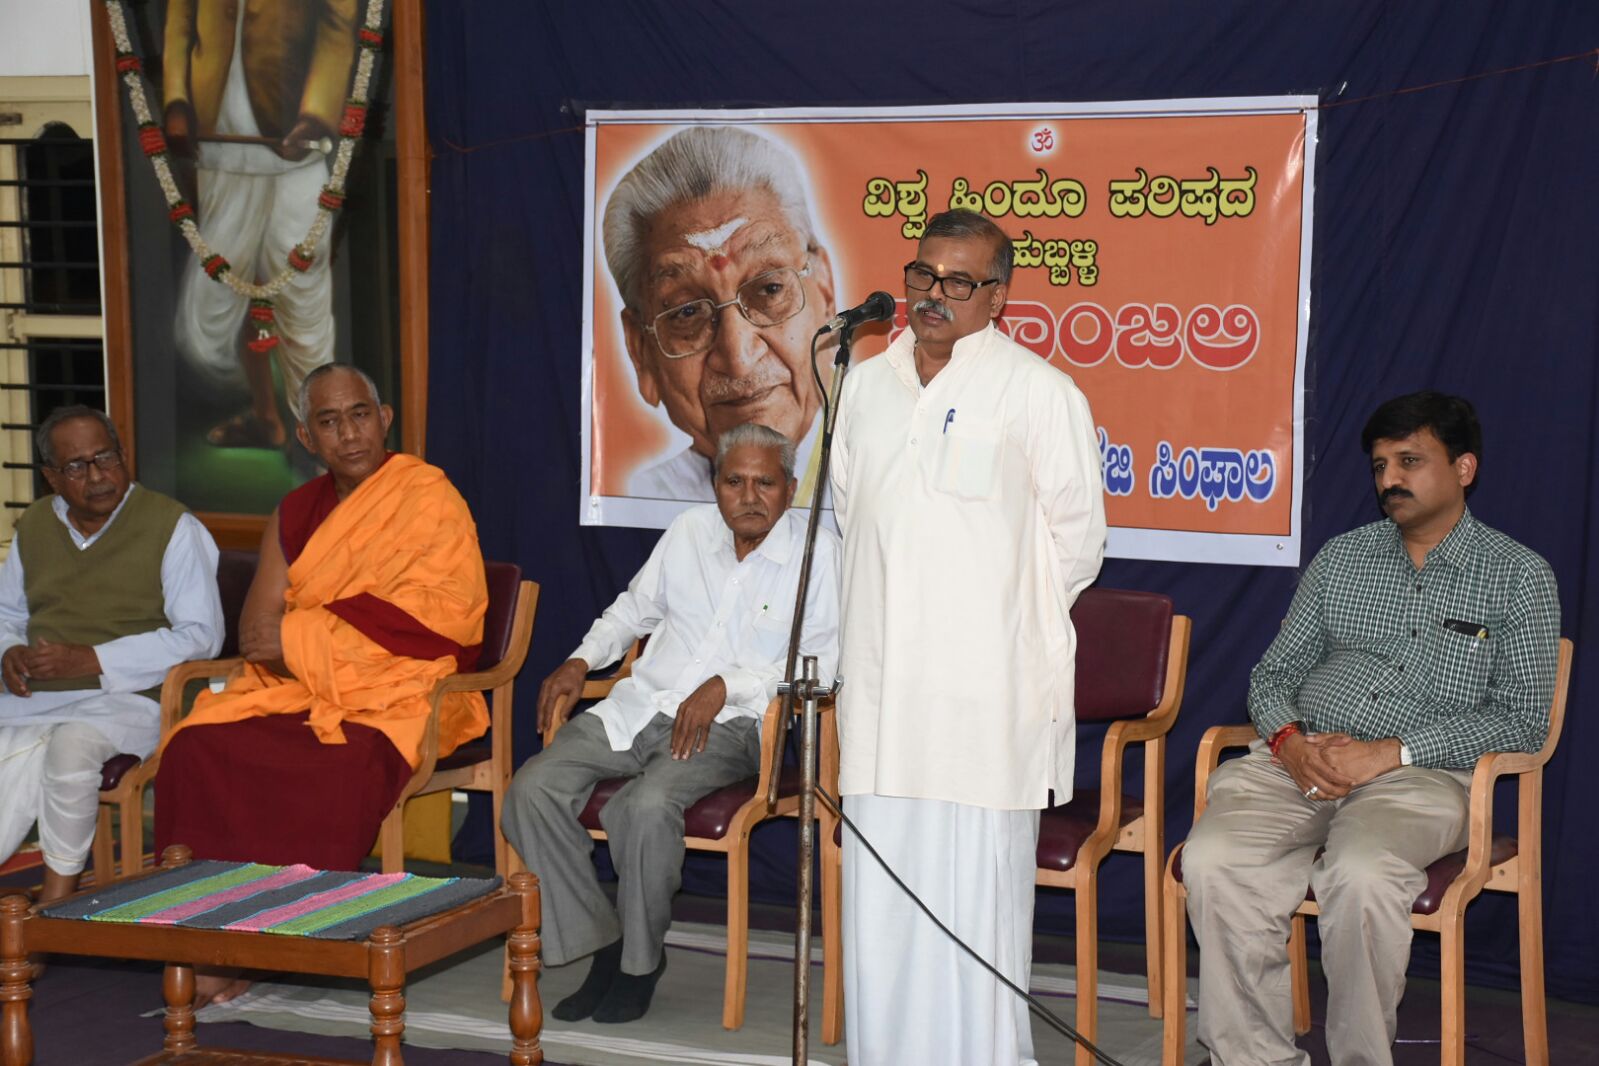 Mangesh Bhende addressing Shraddhanjali Sabha at Hubballi